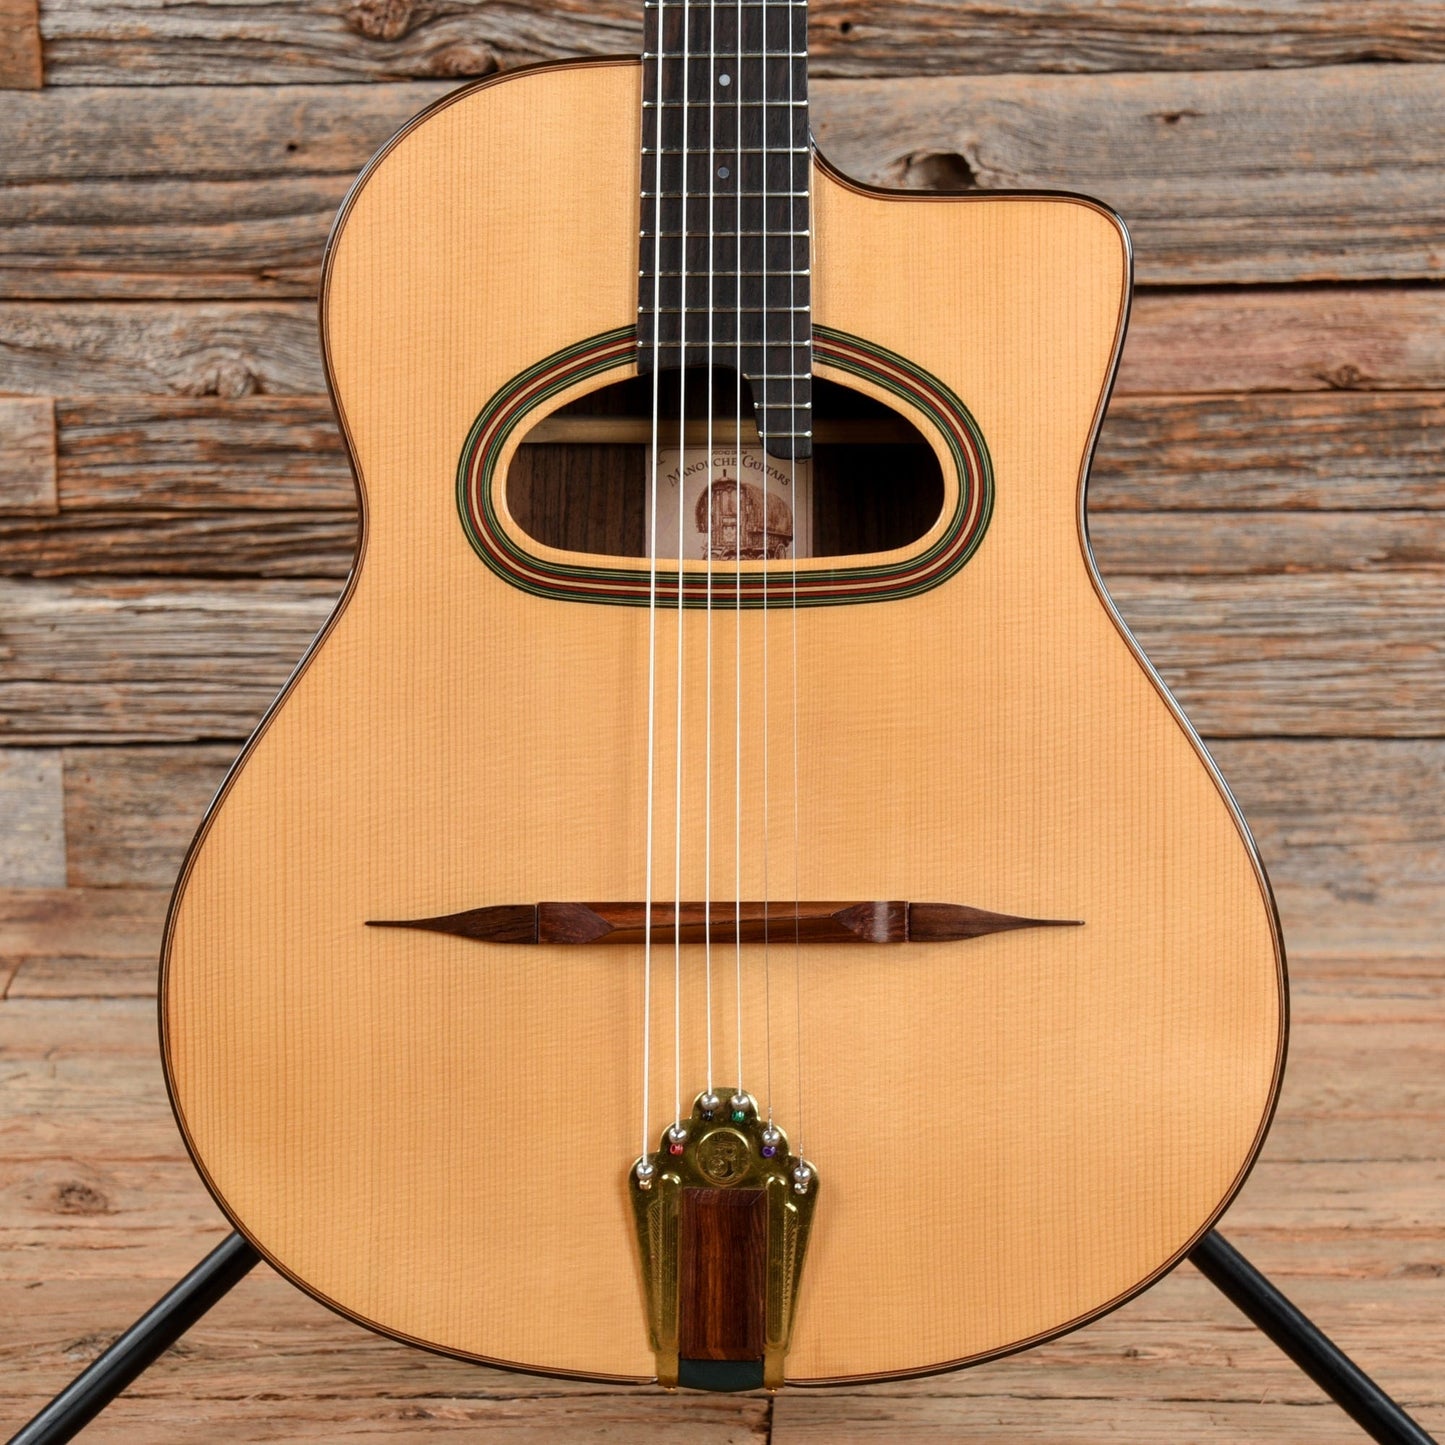 Dell'Arte Manouche Latcho Drom Natural 2015 Acoustic Guitars / Classical